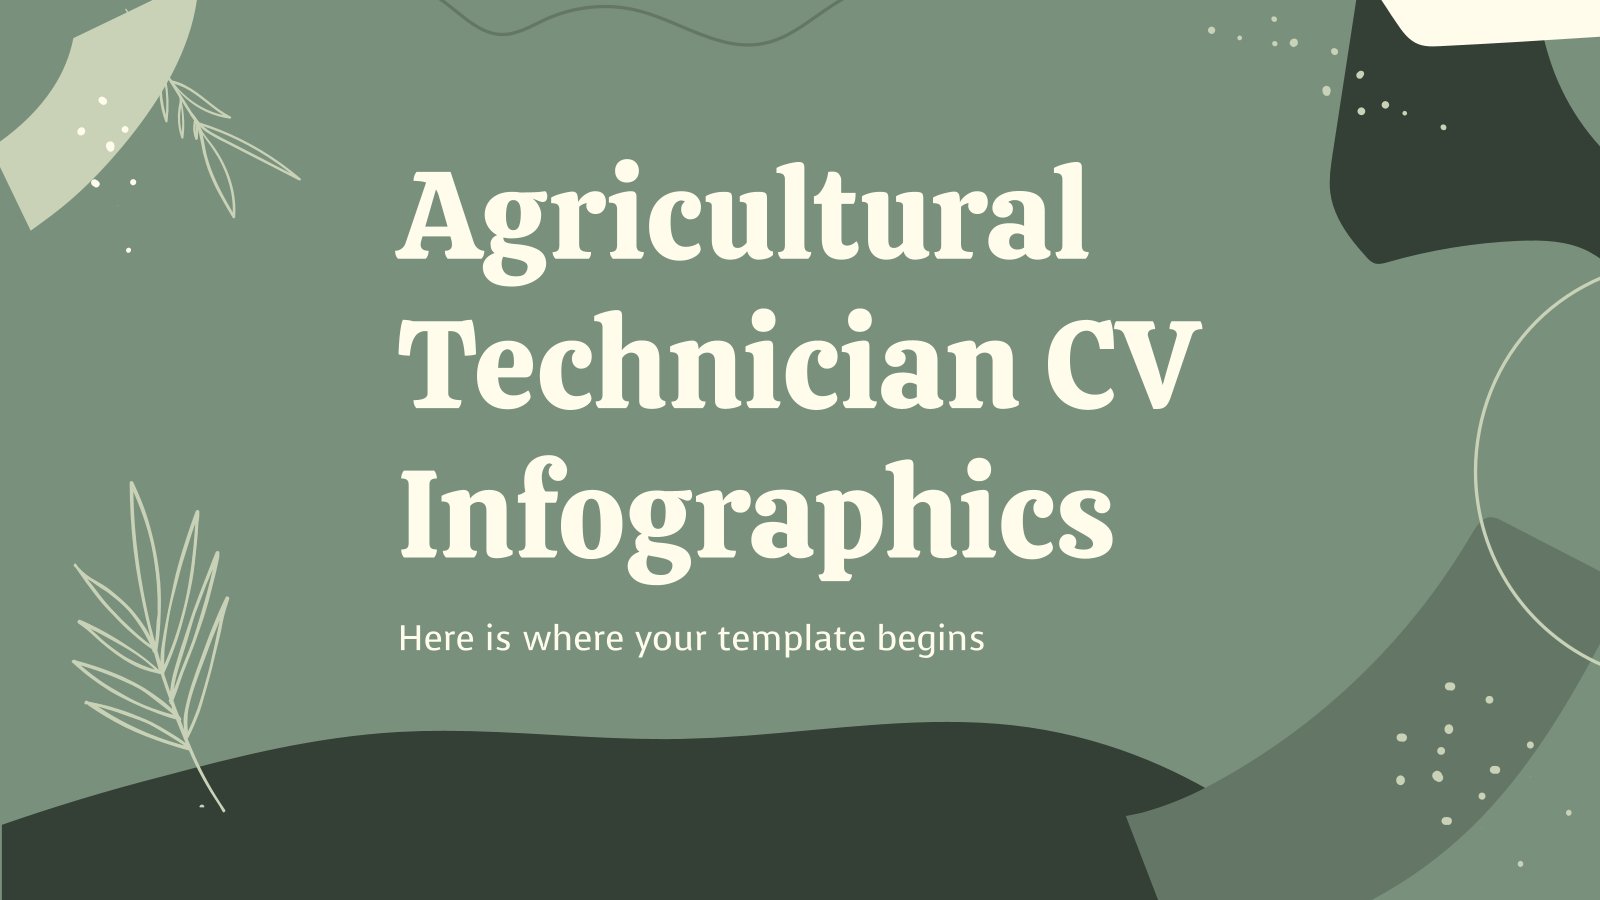 Agricultural Technician CV Infographics presentation template 